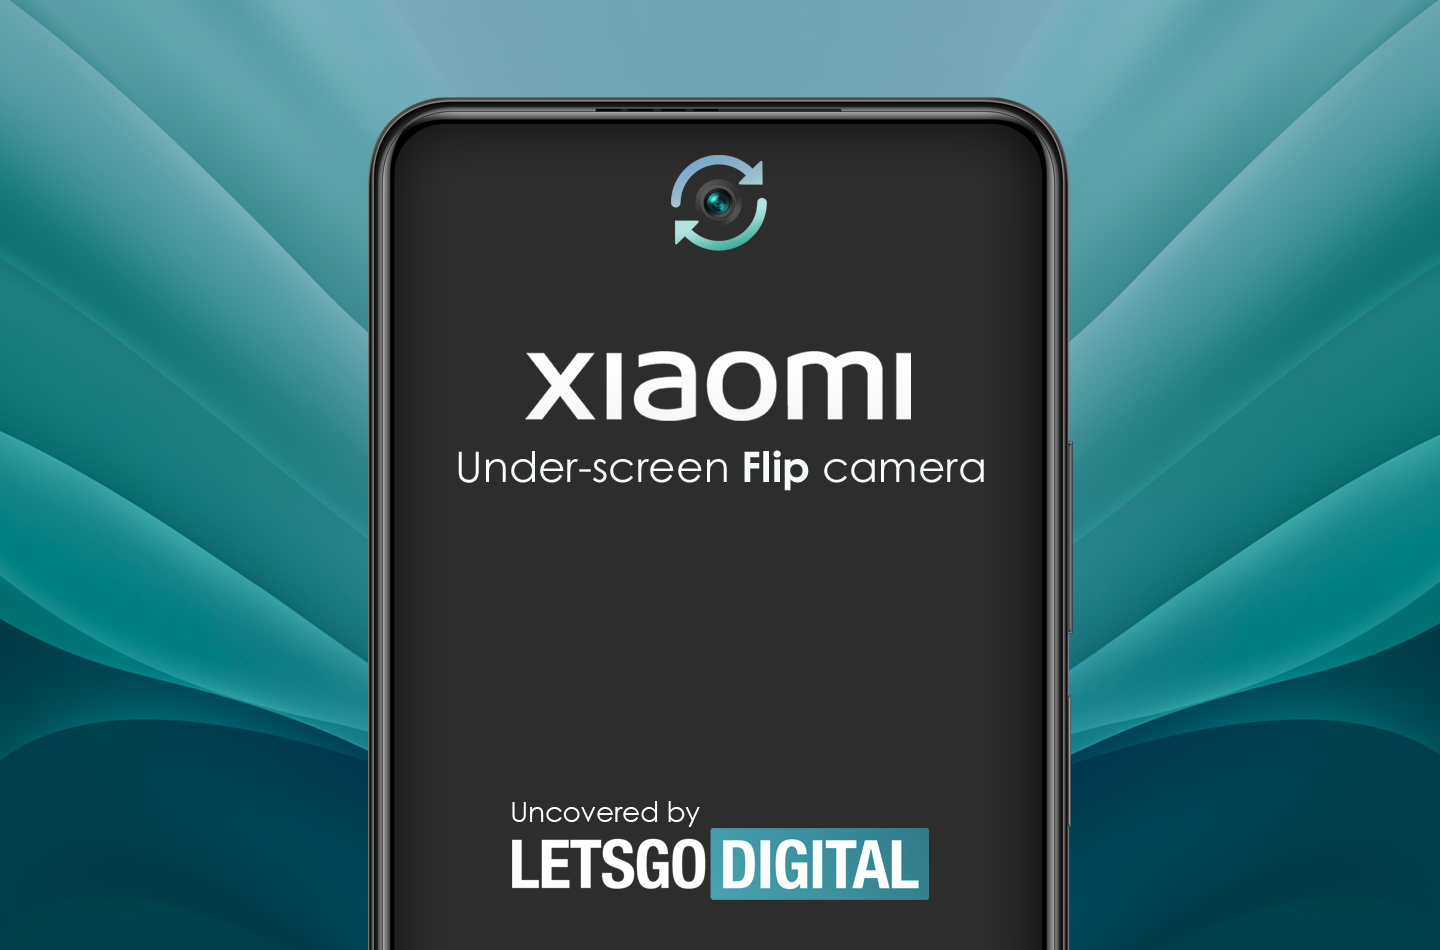 Xiaomi Flip camera